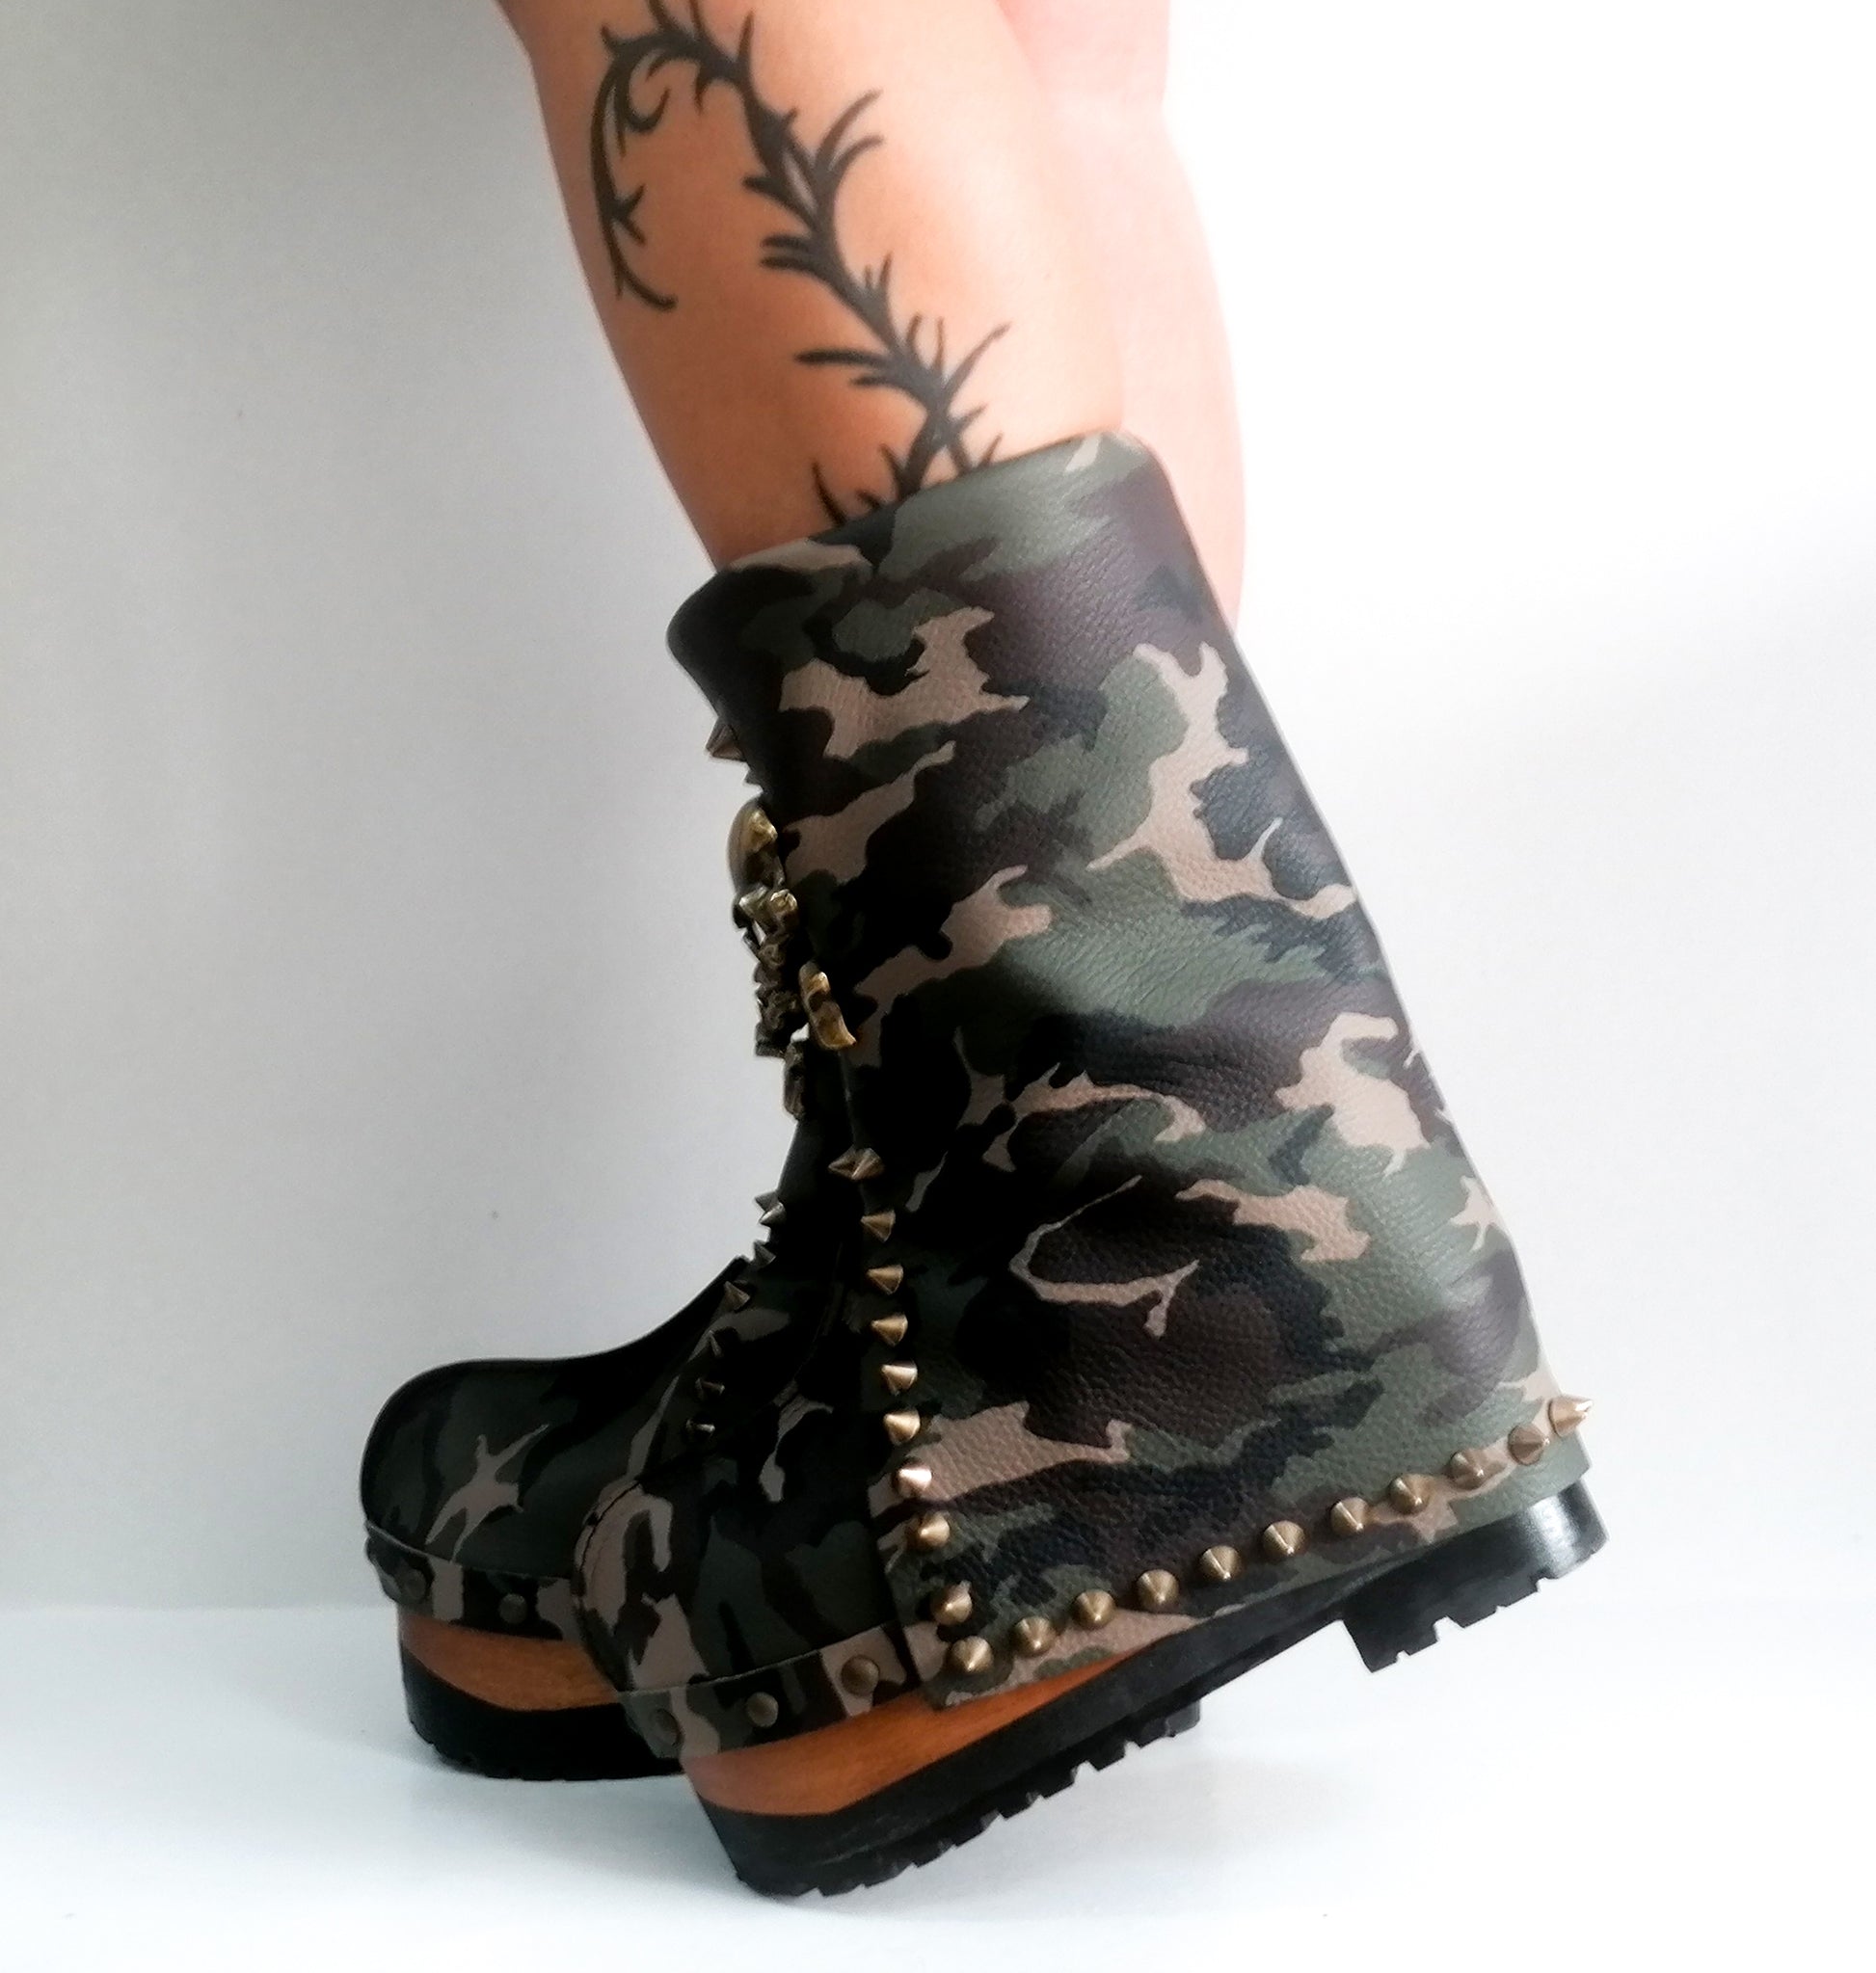 Warrior Army Boots – Sol Caleyo